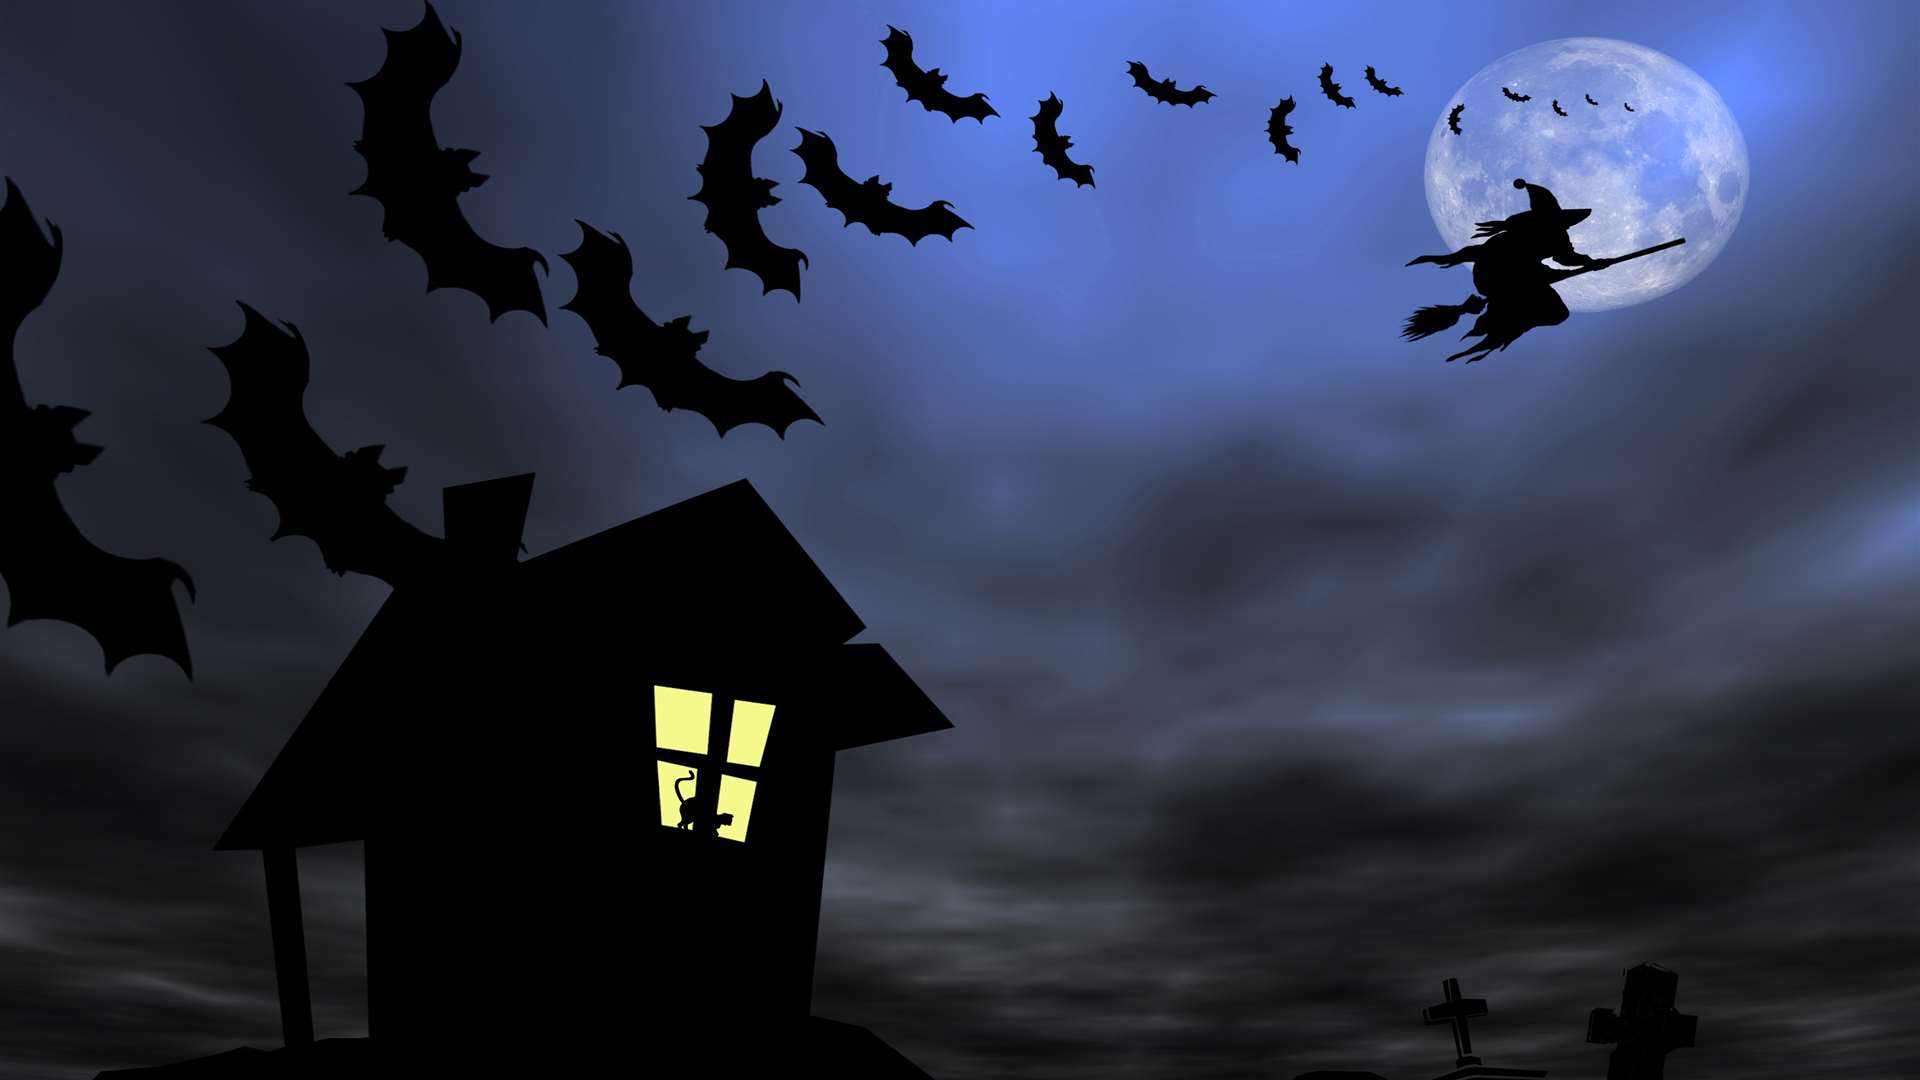 A spooky night